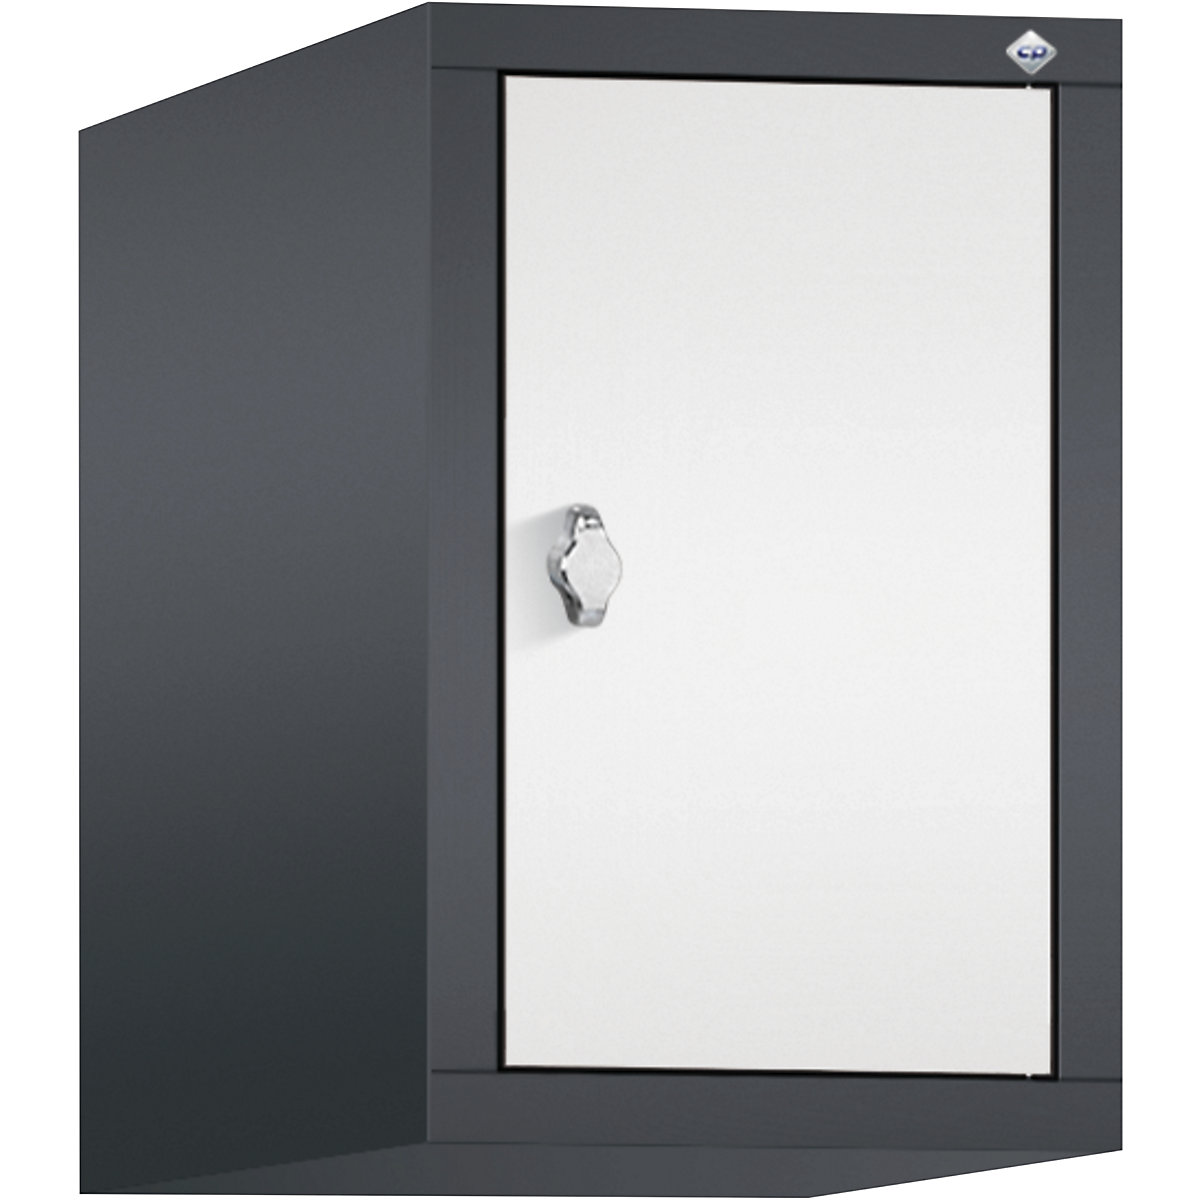 C+P – Altillo CLASSIC, 1 compartimento, anchura de compartimento 300 mm, gris negruzco / blanco tráfico